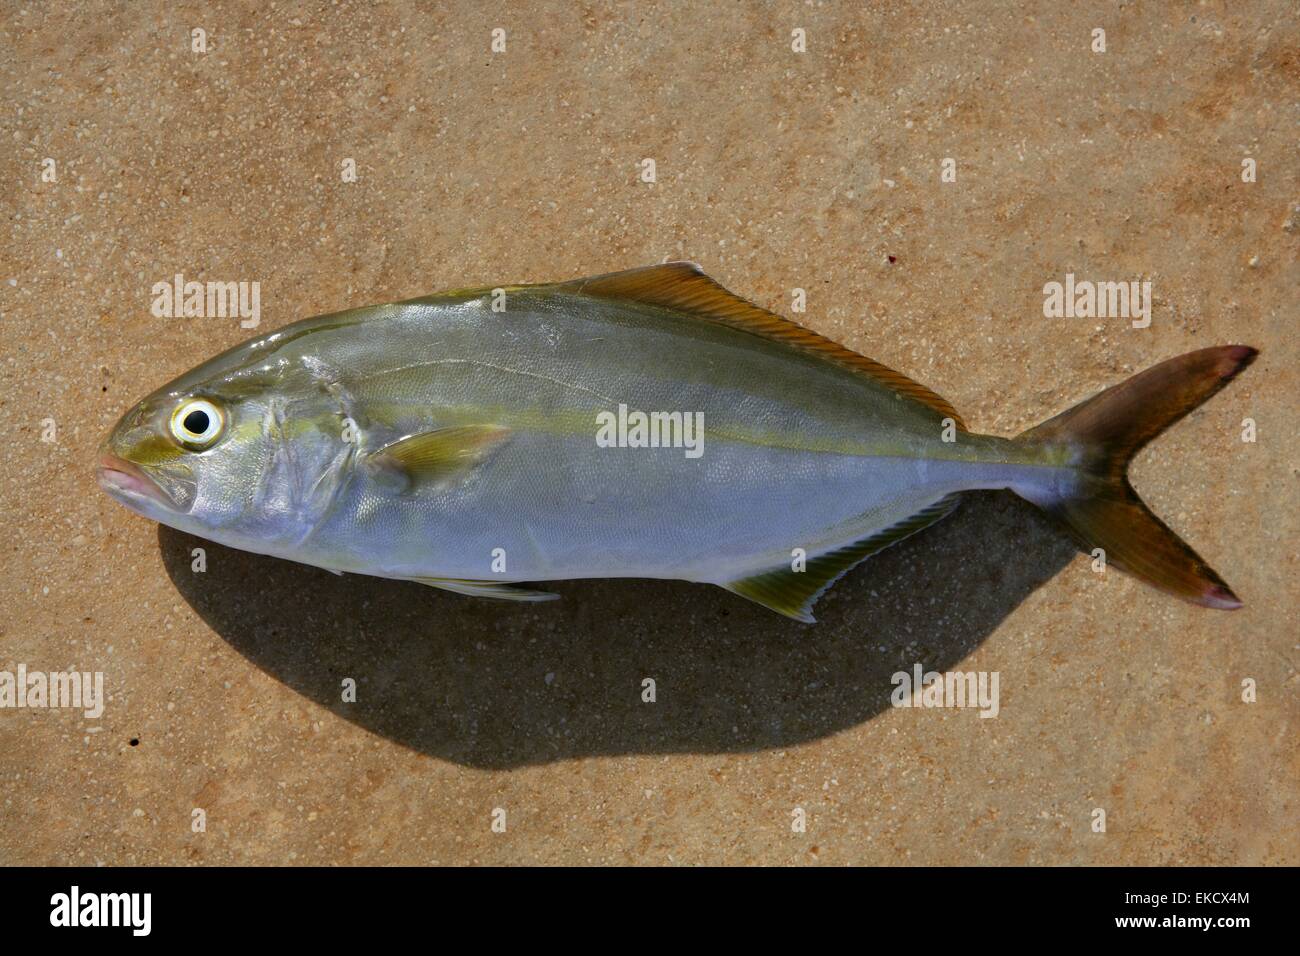 Seriola dumerili fish greater amberjack fish Stock Photo